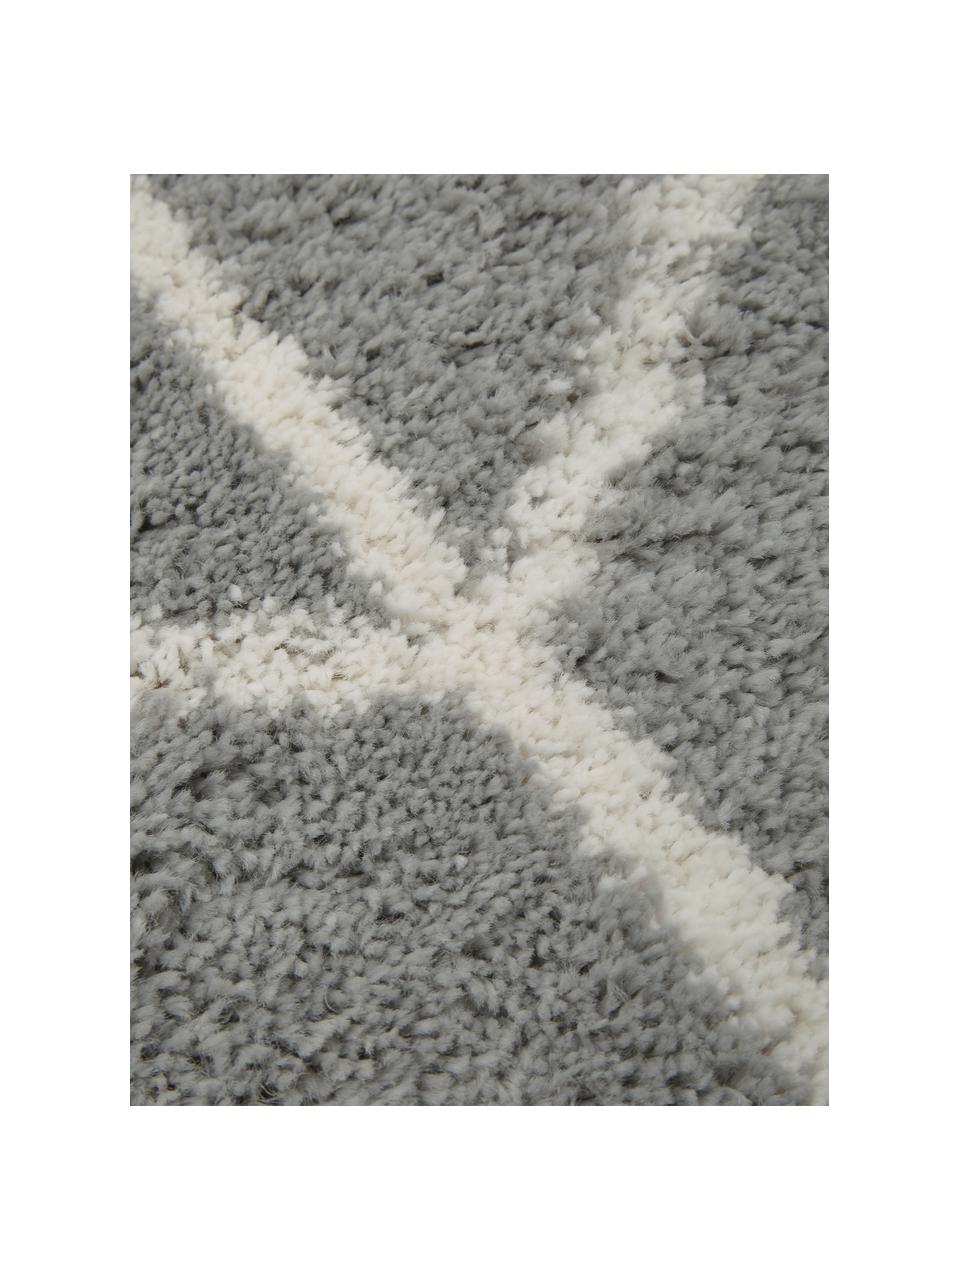 Hochflor-Teppich Cera in Grau/Creme, Flor: 100% Polypropylen, Grau, Cremeweiss, B 120 x L 180 cm (Grösse S)